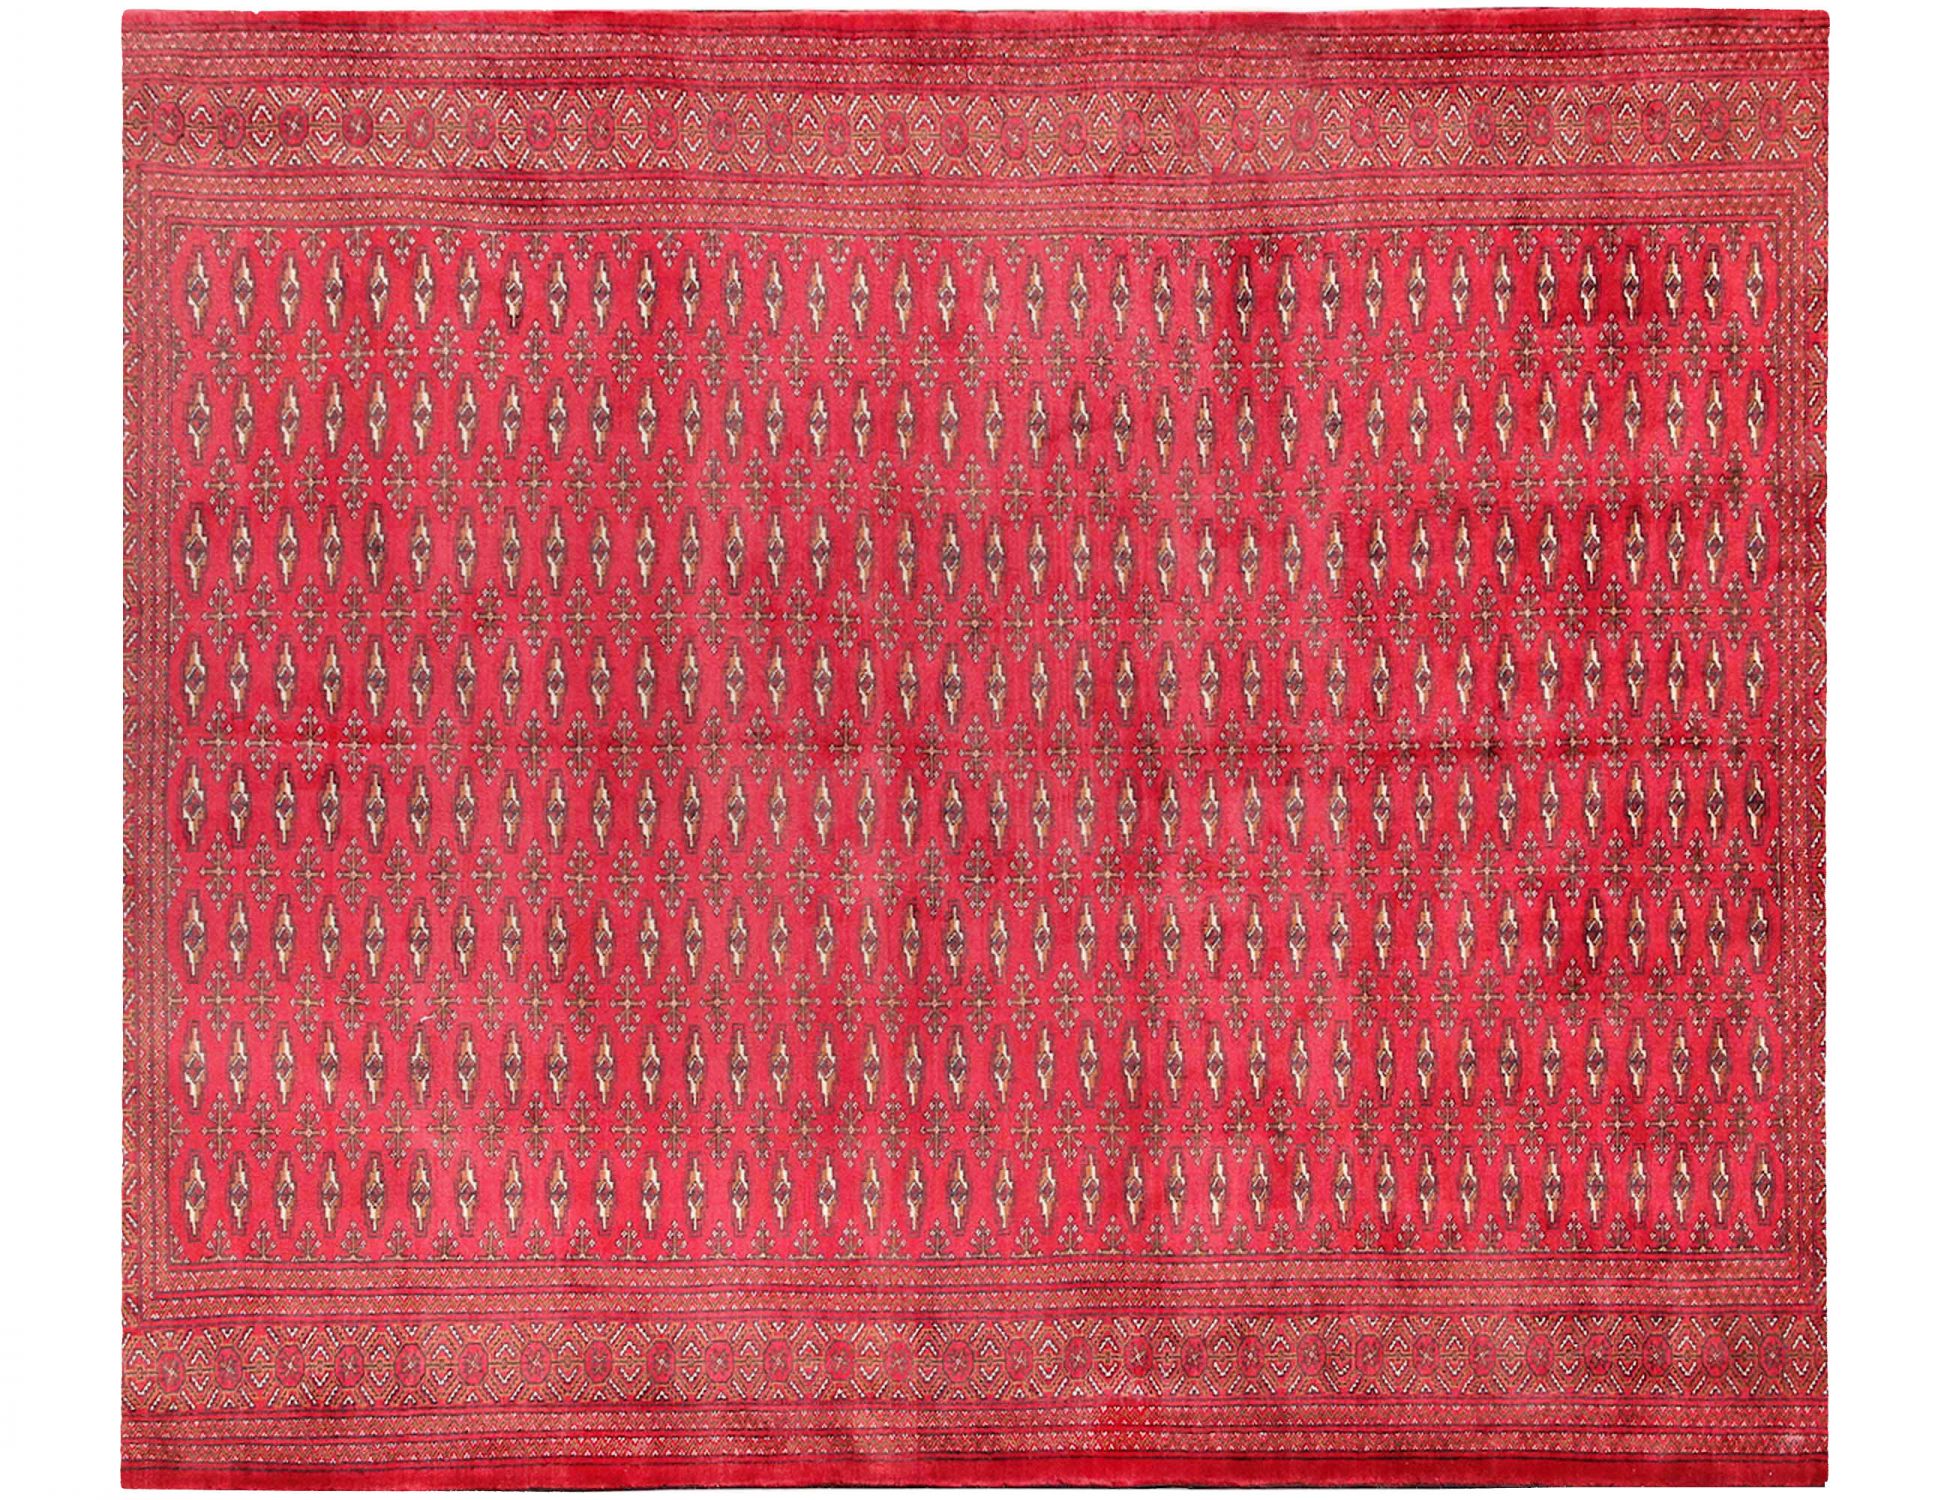  Tapis  rouge <br/>254 x 202 cm